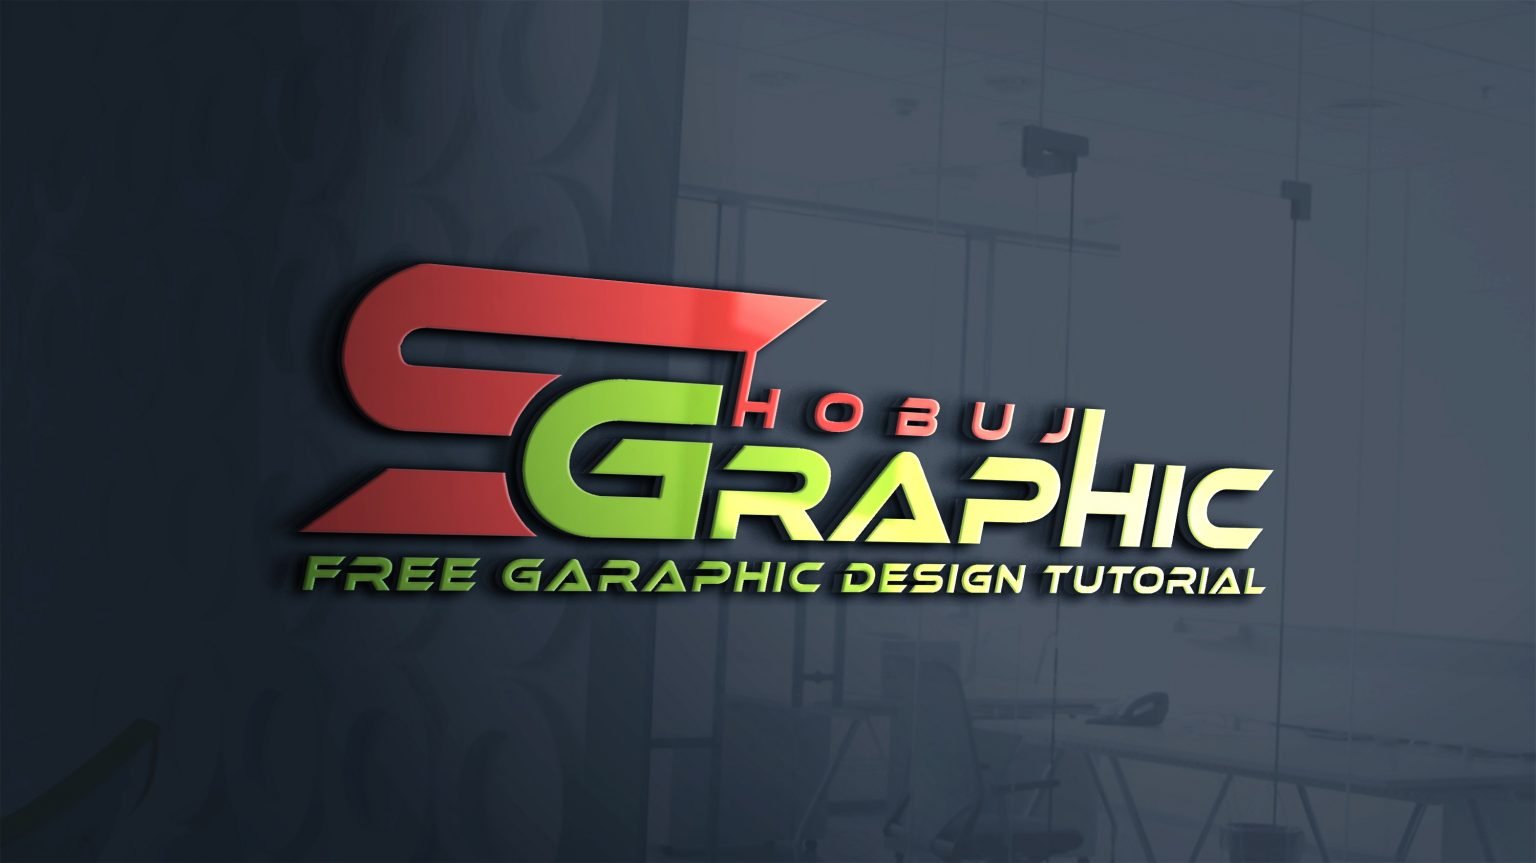 photoshop logo design templates free download